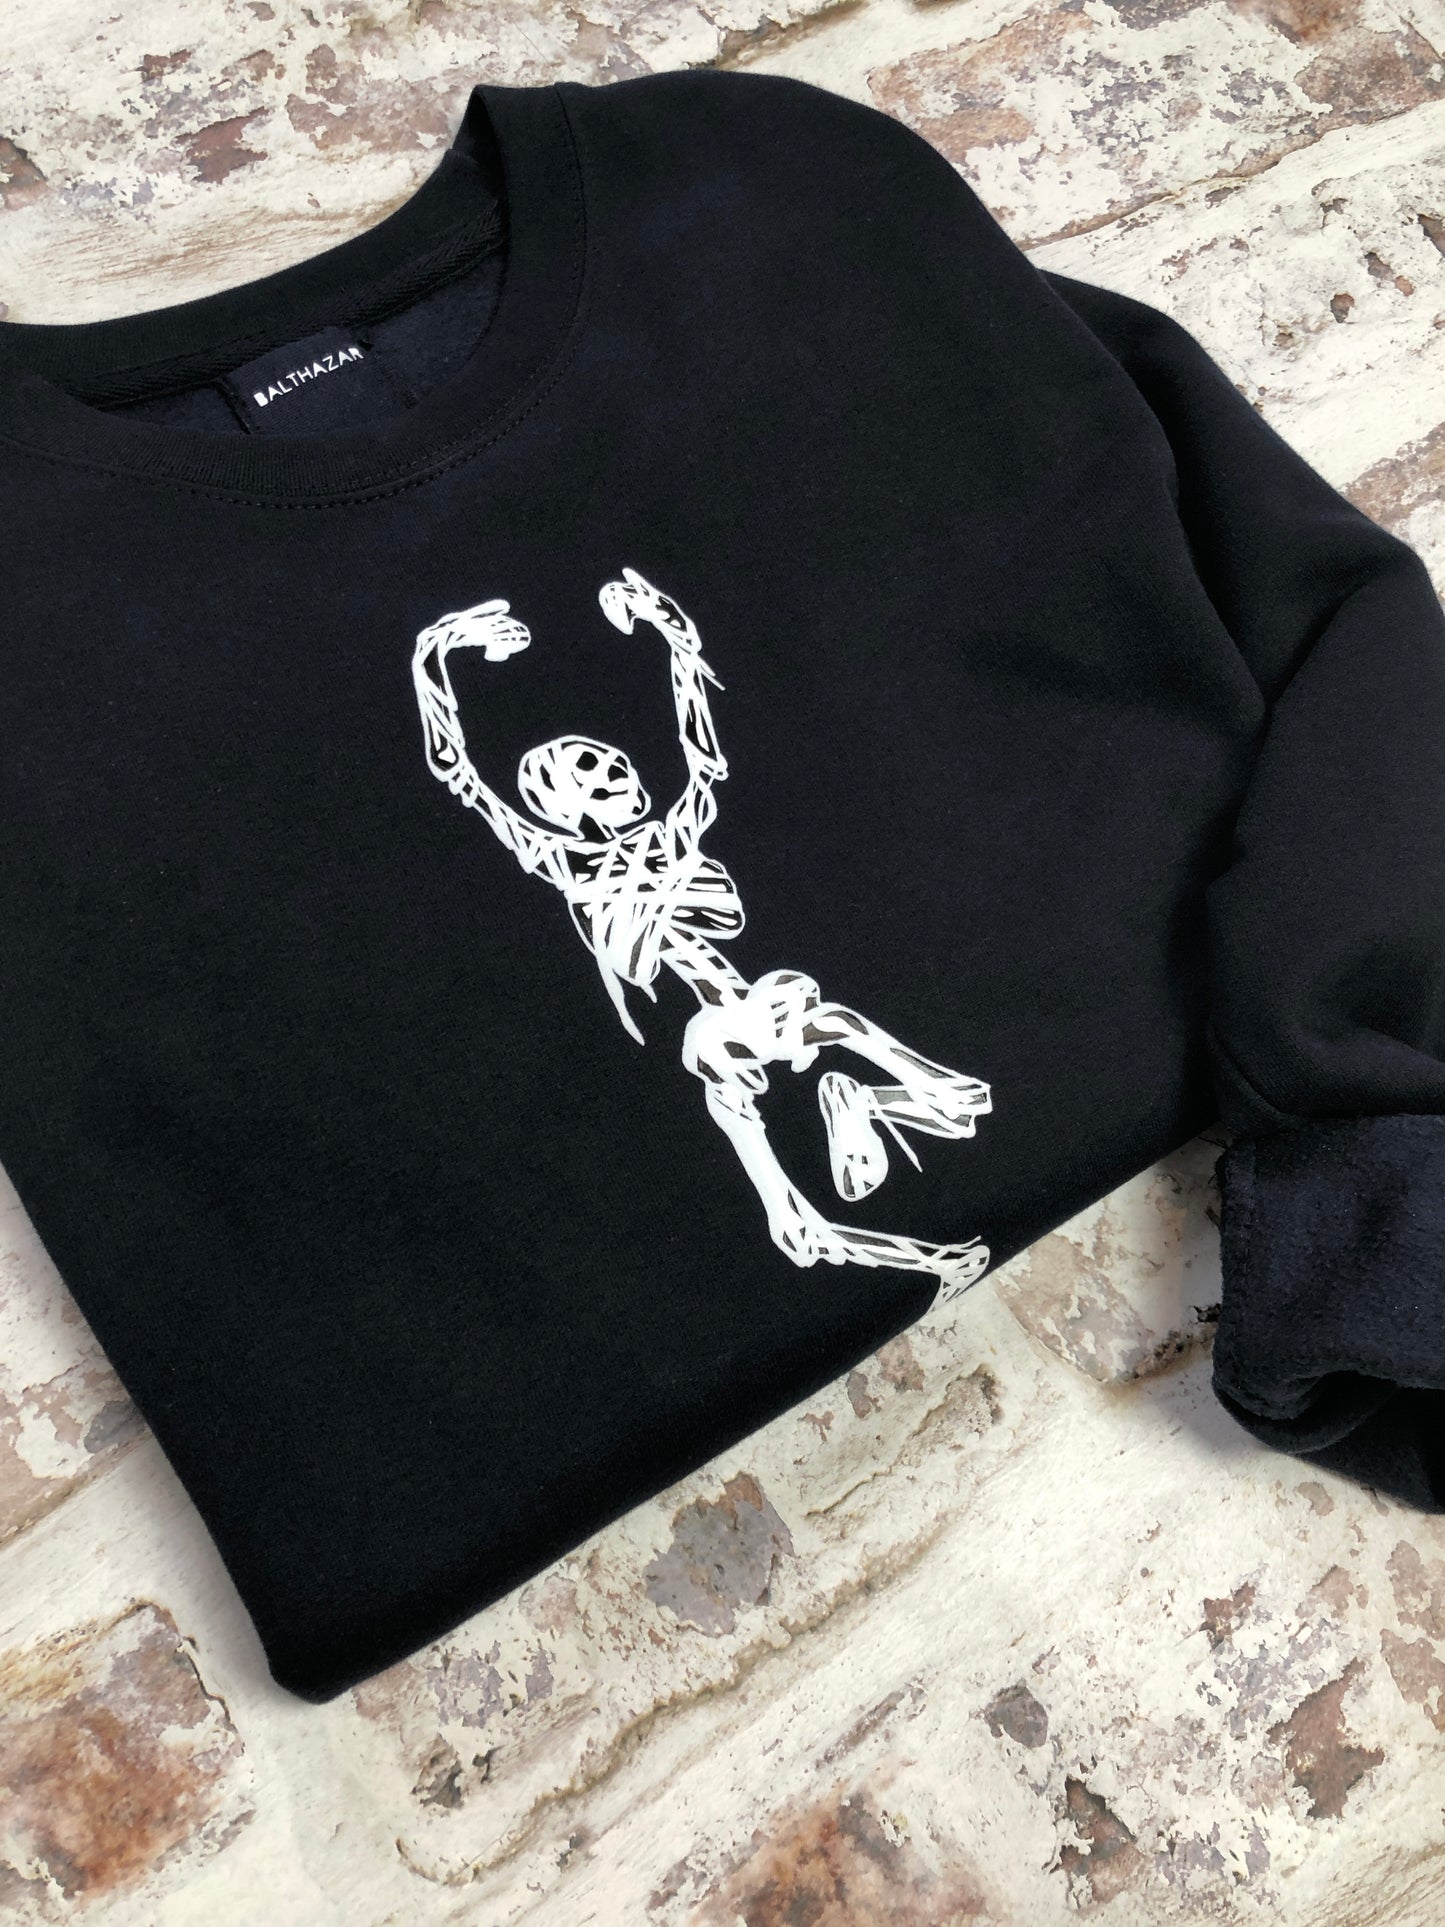 The Dancing "Mummy" skeleton sweatshirts